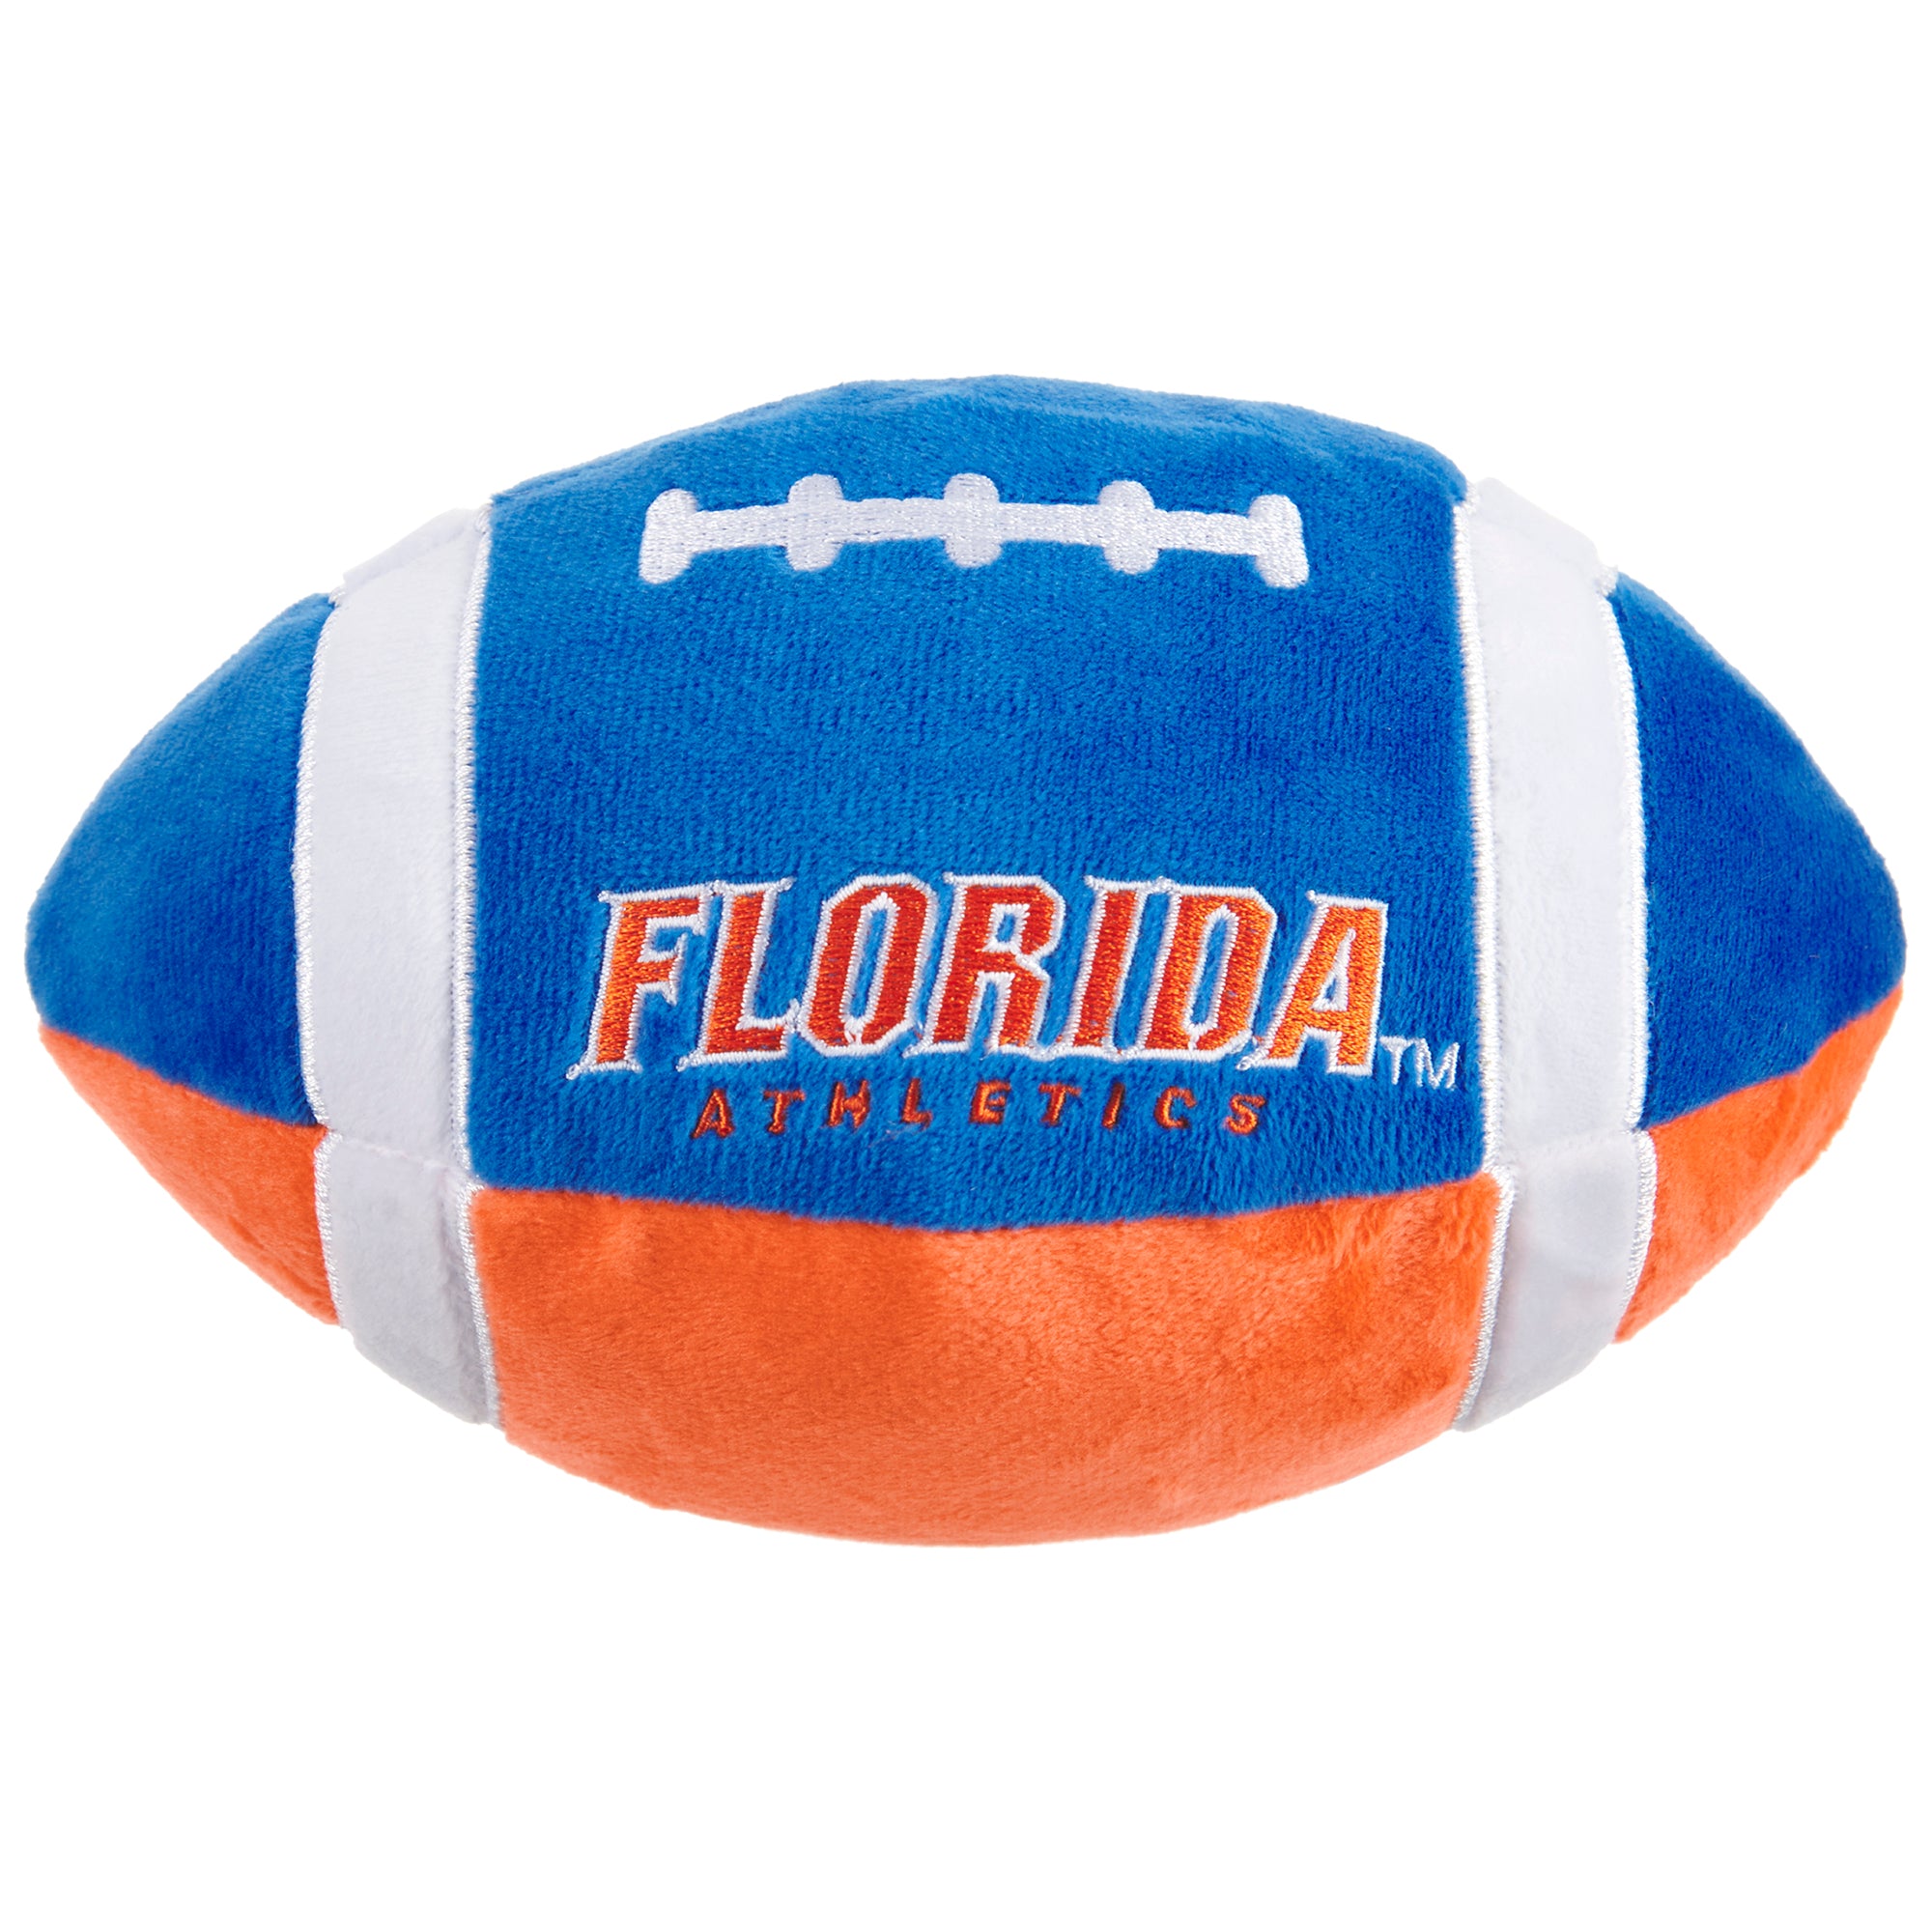 Florida Fetchin' Football Toy